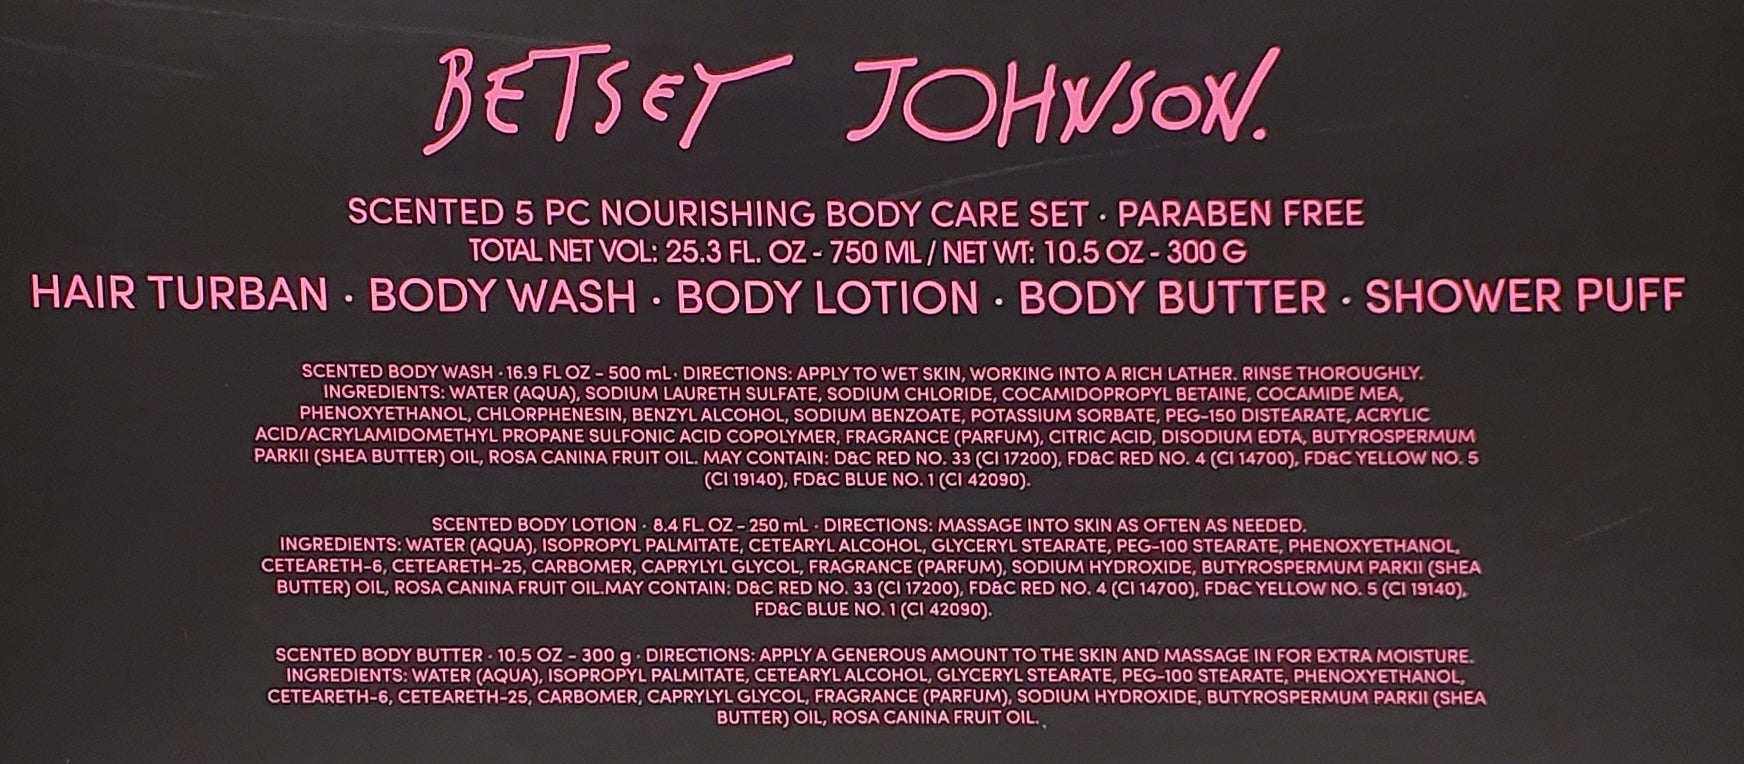 Betsey Johnson 5 Piece Nourishing Body Care Gift Set - Vivid Roses